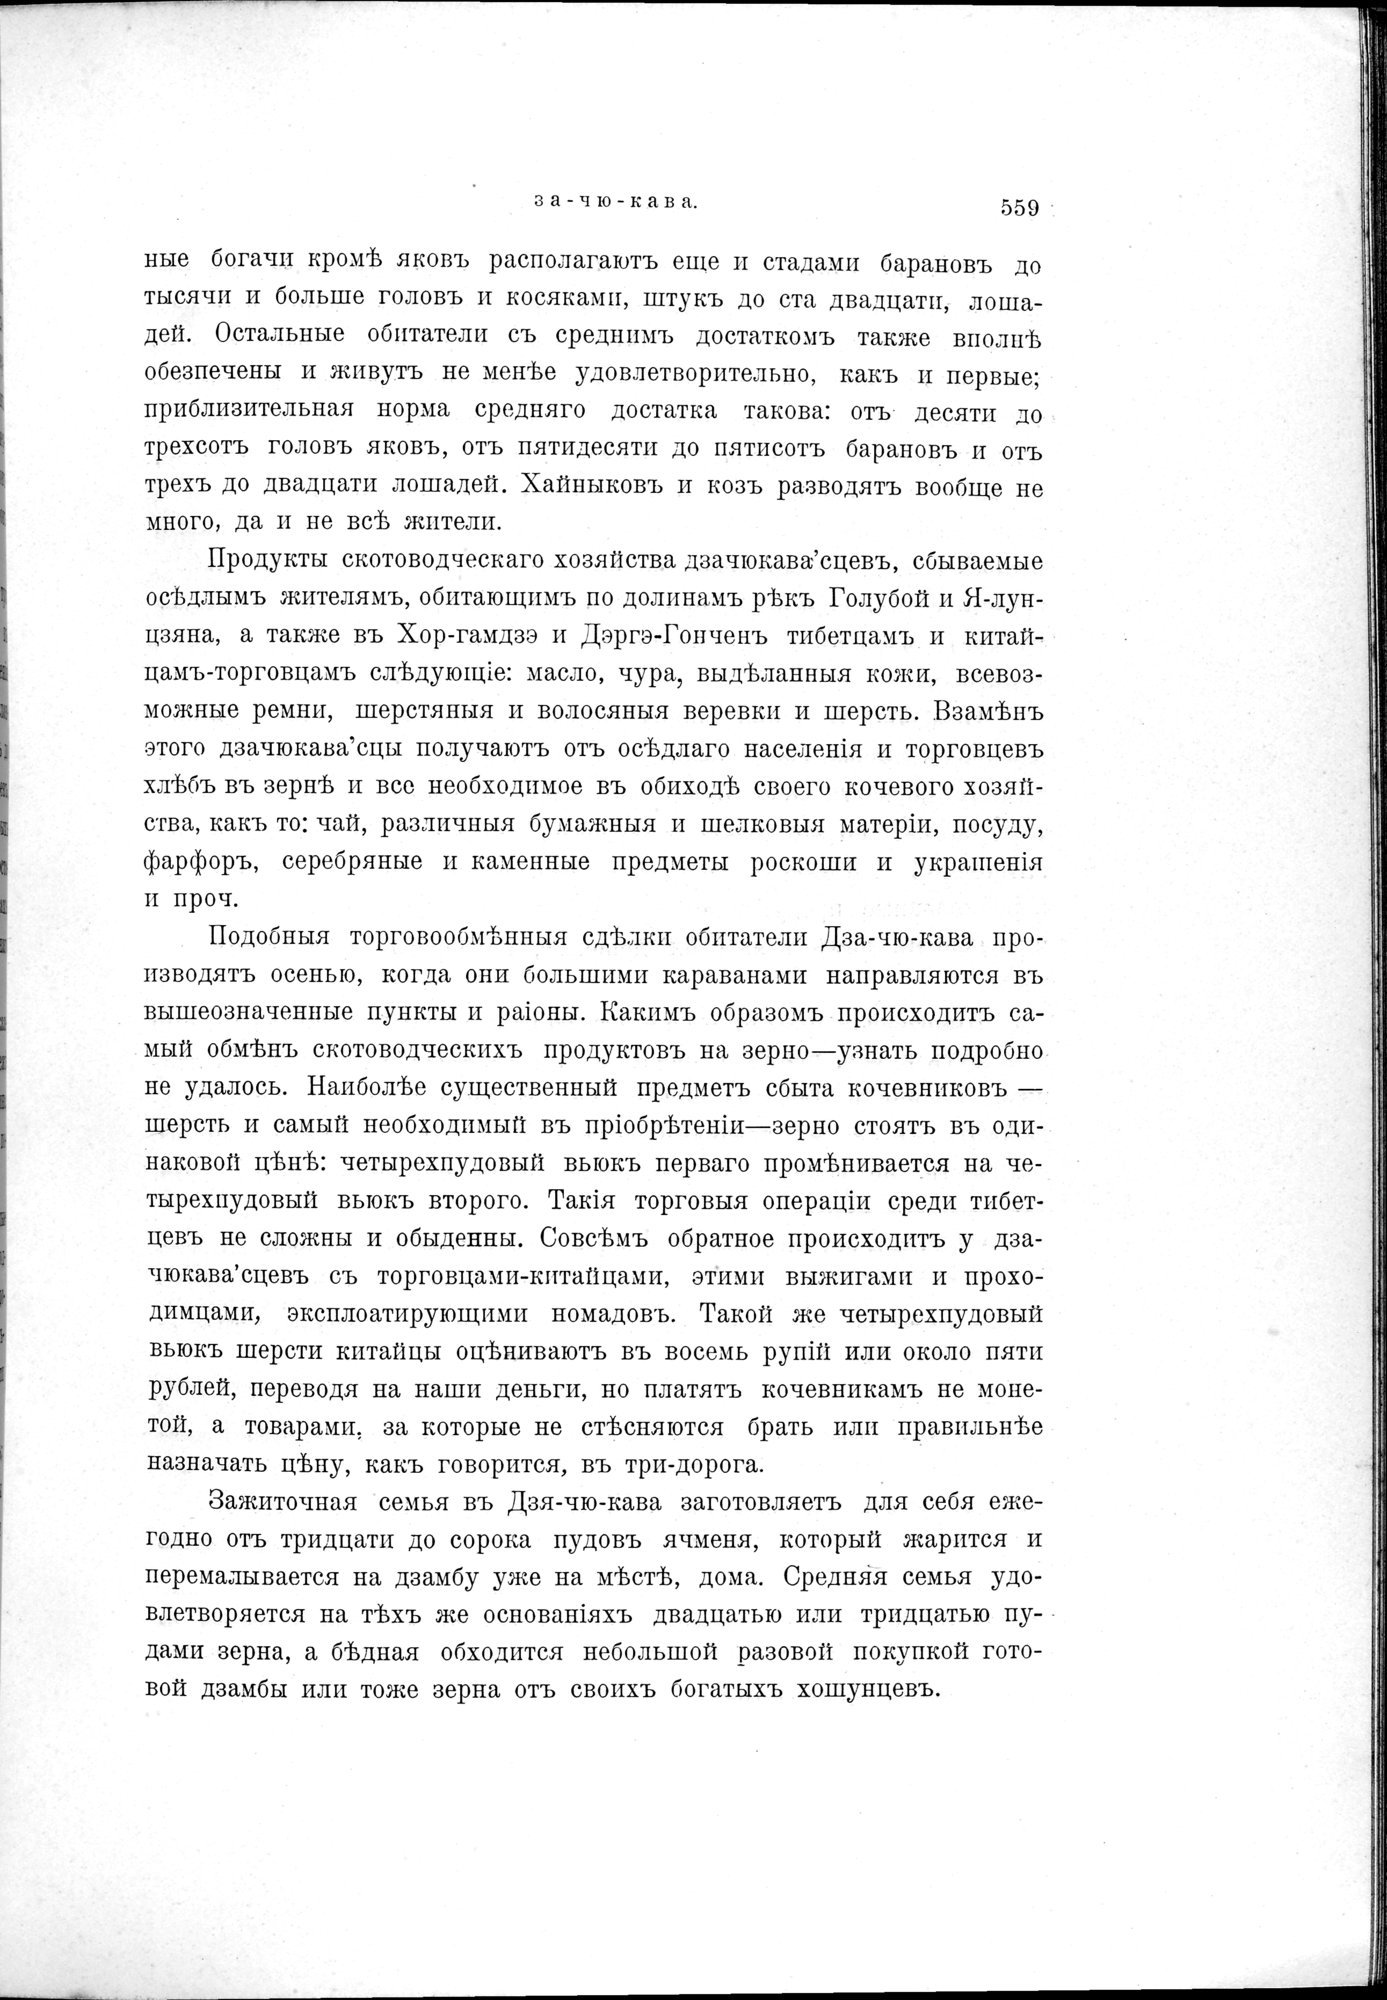 Mongoliia i Kam : vol.2 / Page 383 (Grayscale High Resolution Image)